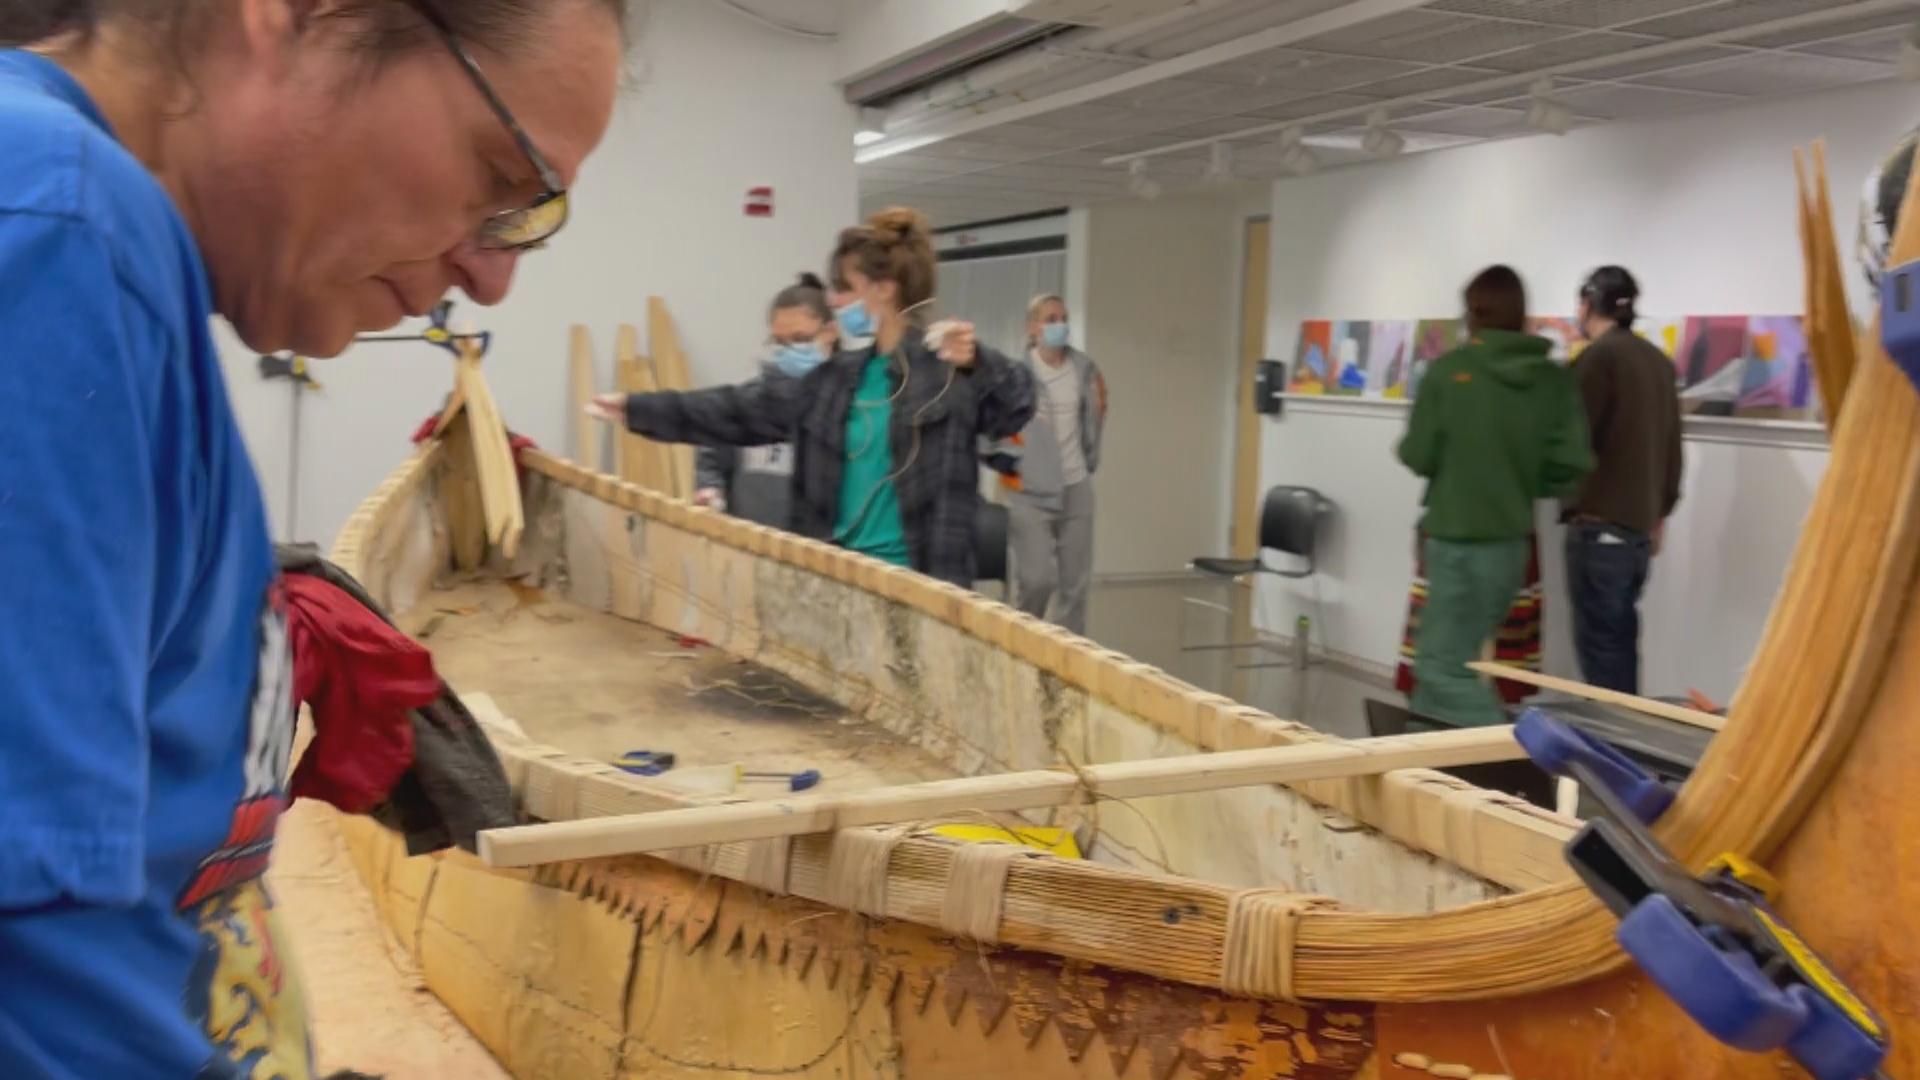 Wayne Valliere, a member of the Lac du Flambeau Band of Lake Superior Ojibwe, builds a 16-foot birchbark canoe at Northwestern University. (Courtesy: Northwestern University)